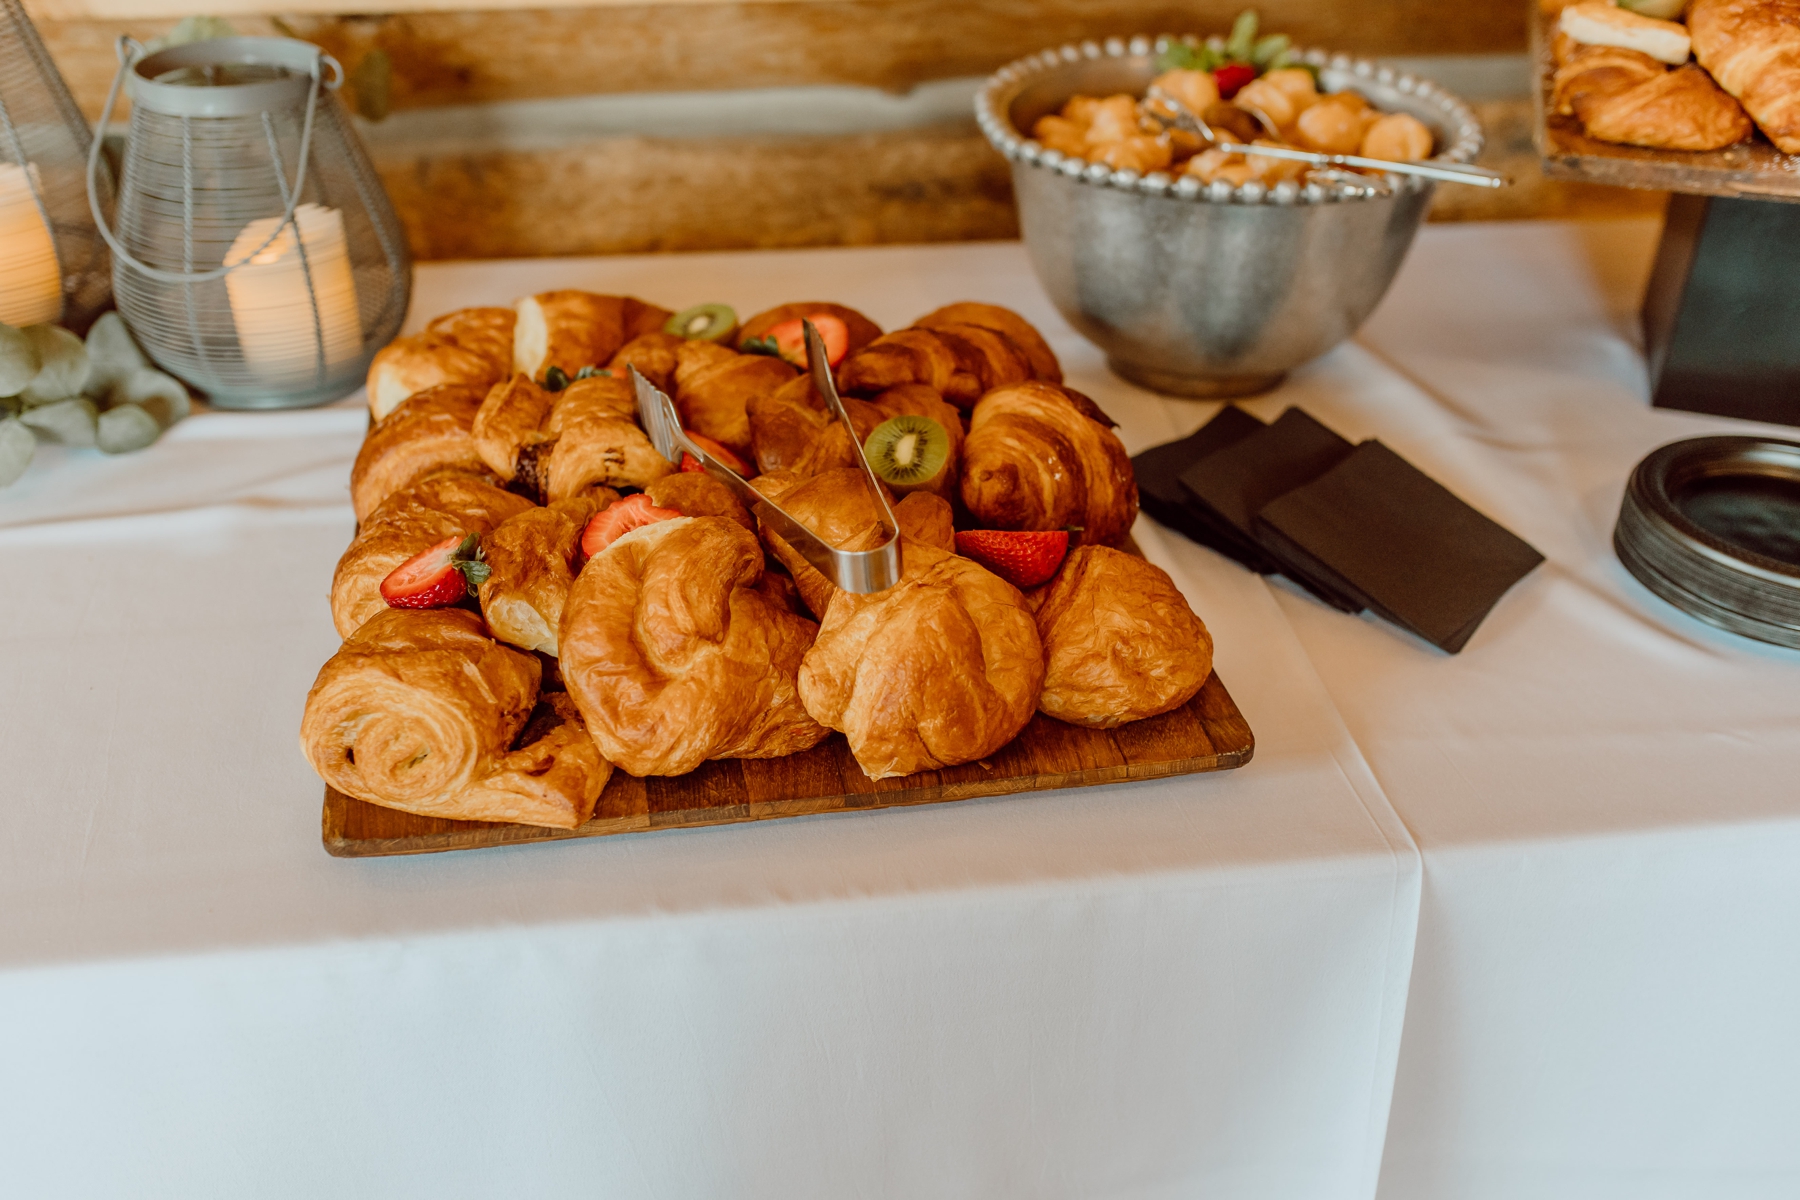 Platter of croissants at brunch wedding reception 